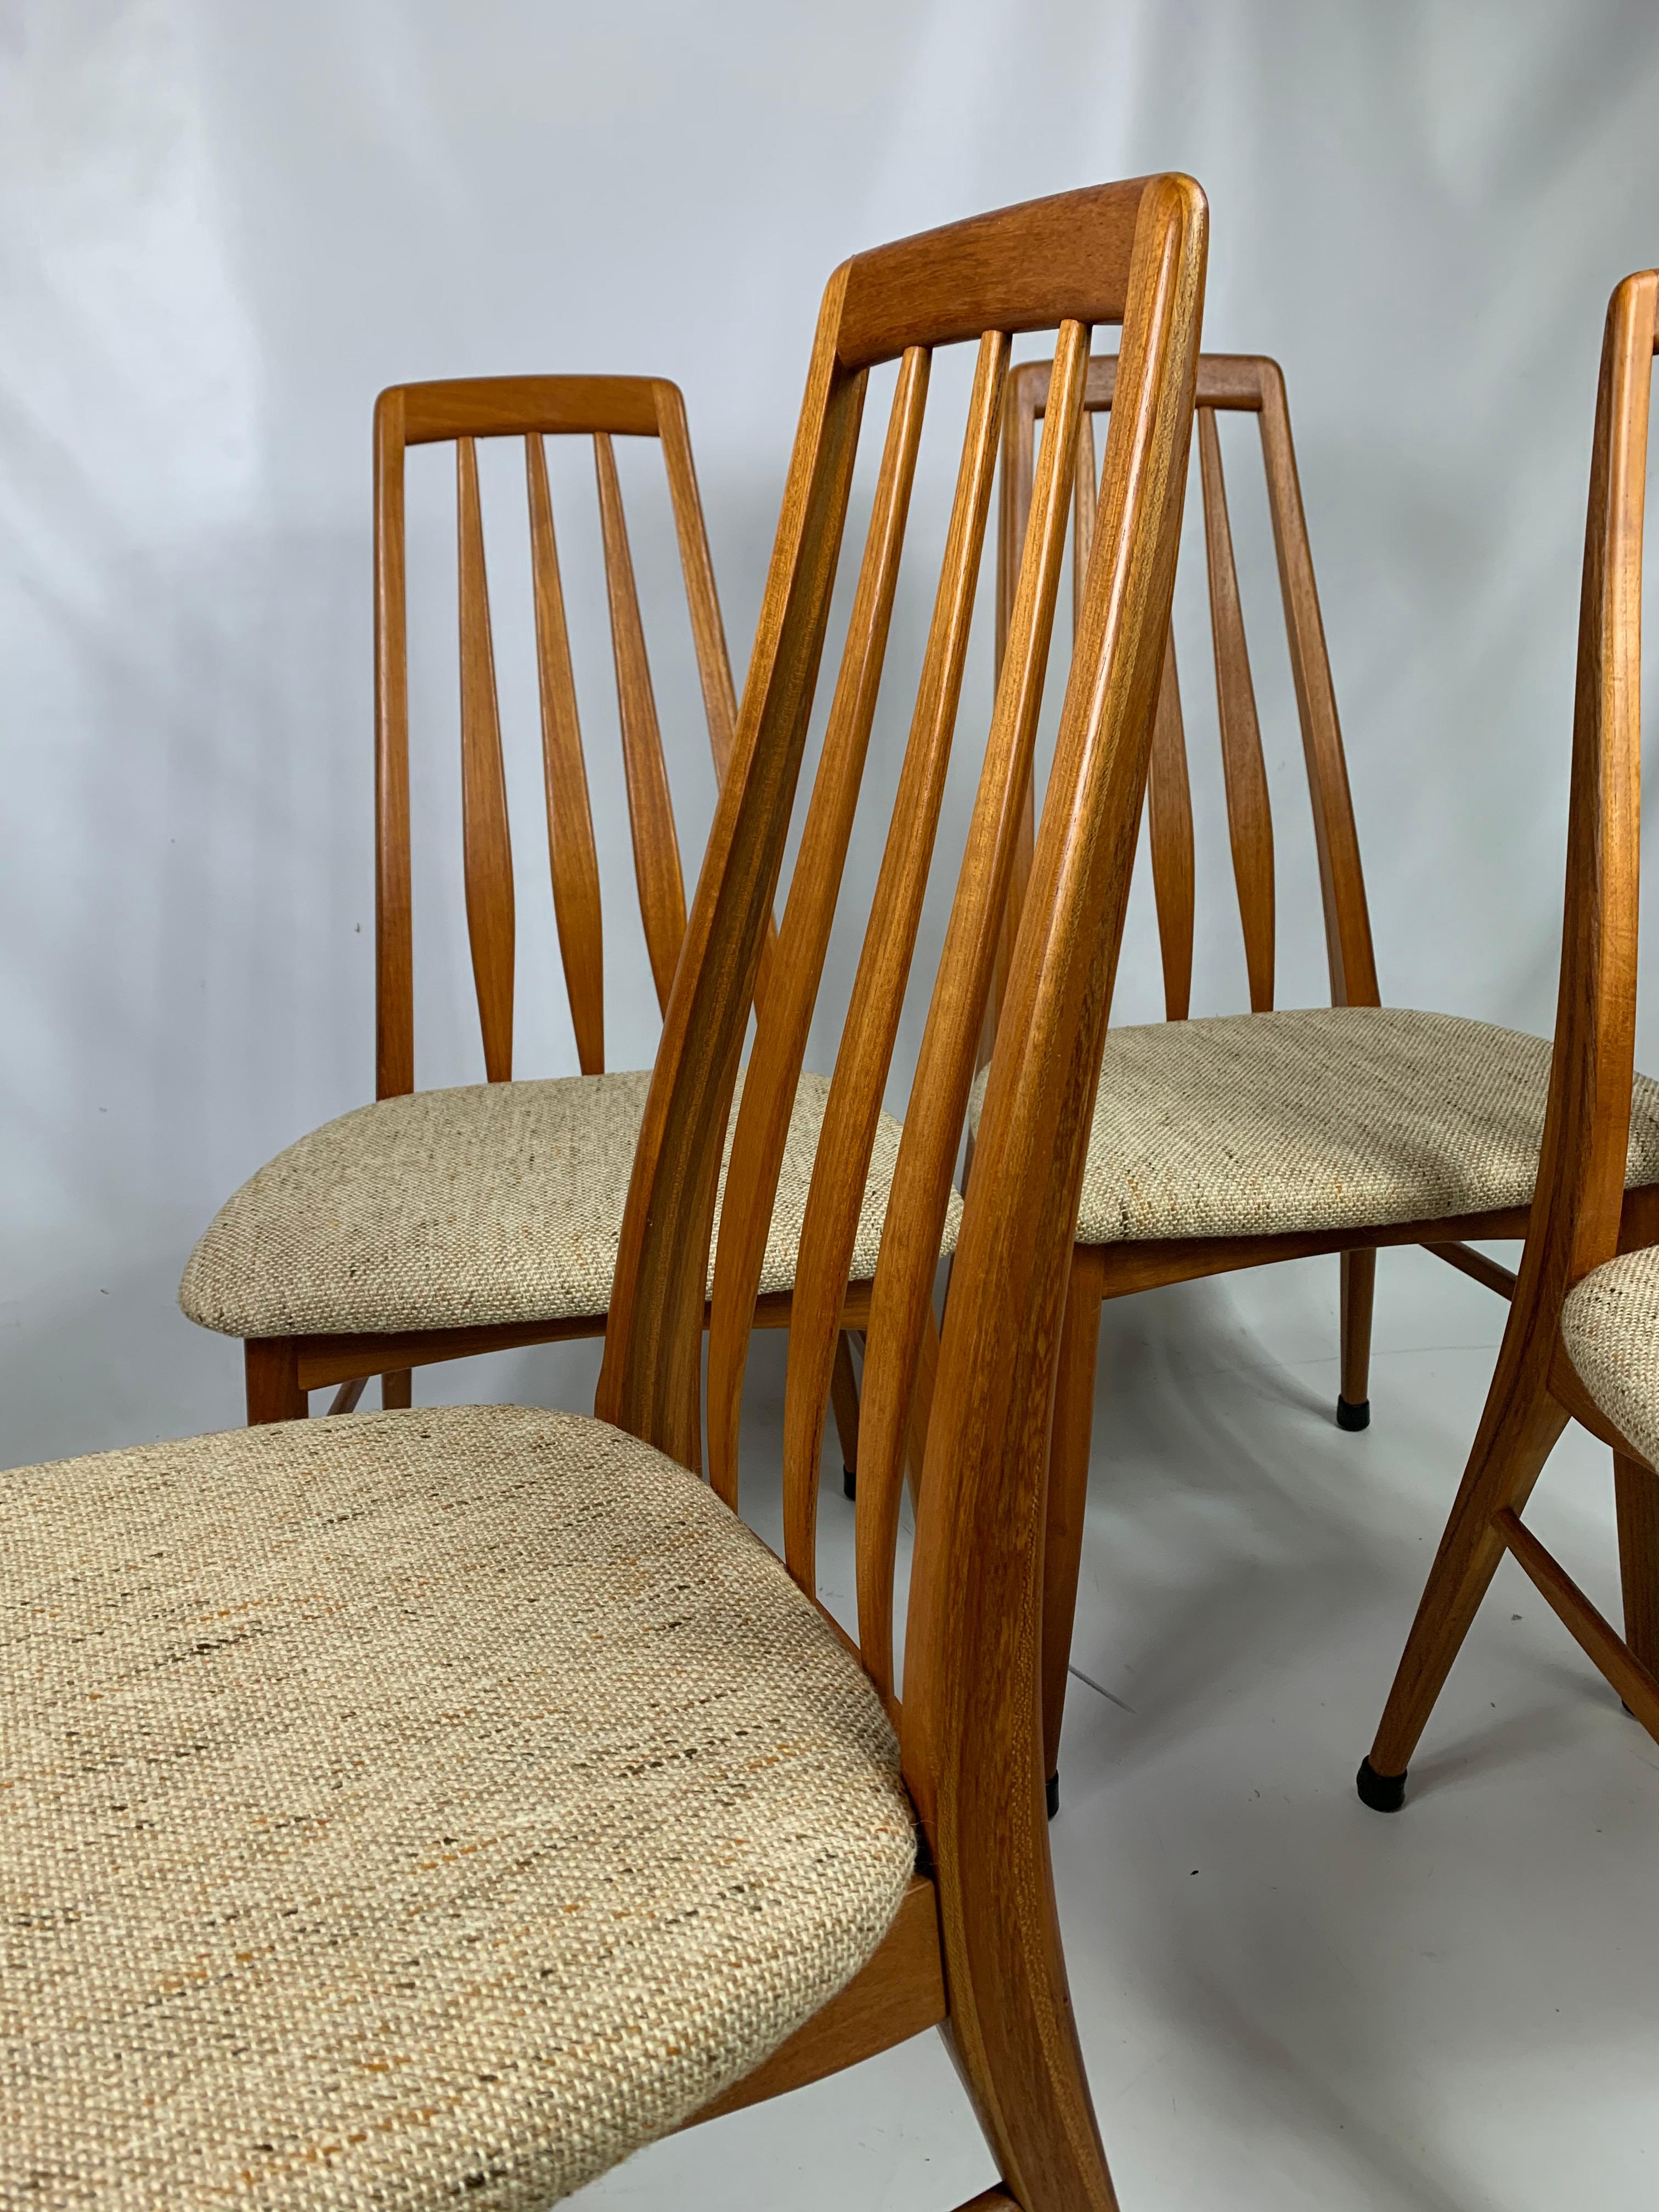 European Midcentury Danish Teak Koefoeds Hornslet 'Eva' Chairs, Set of 4